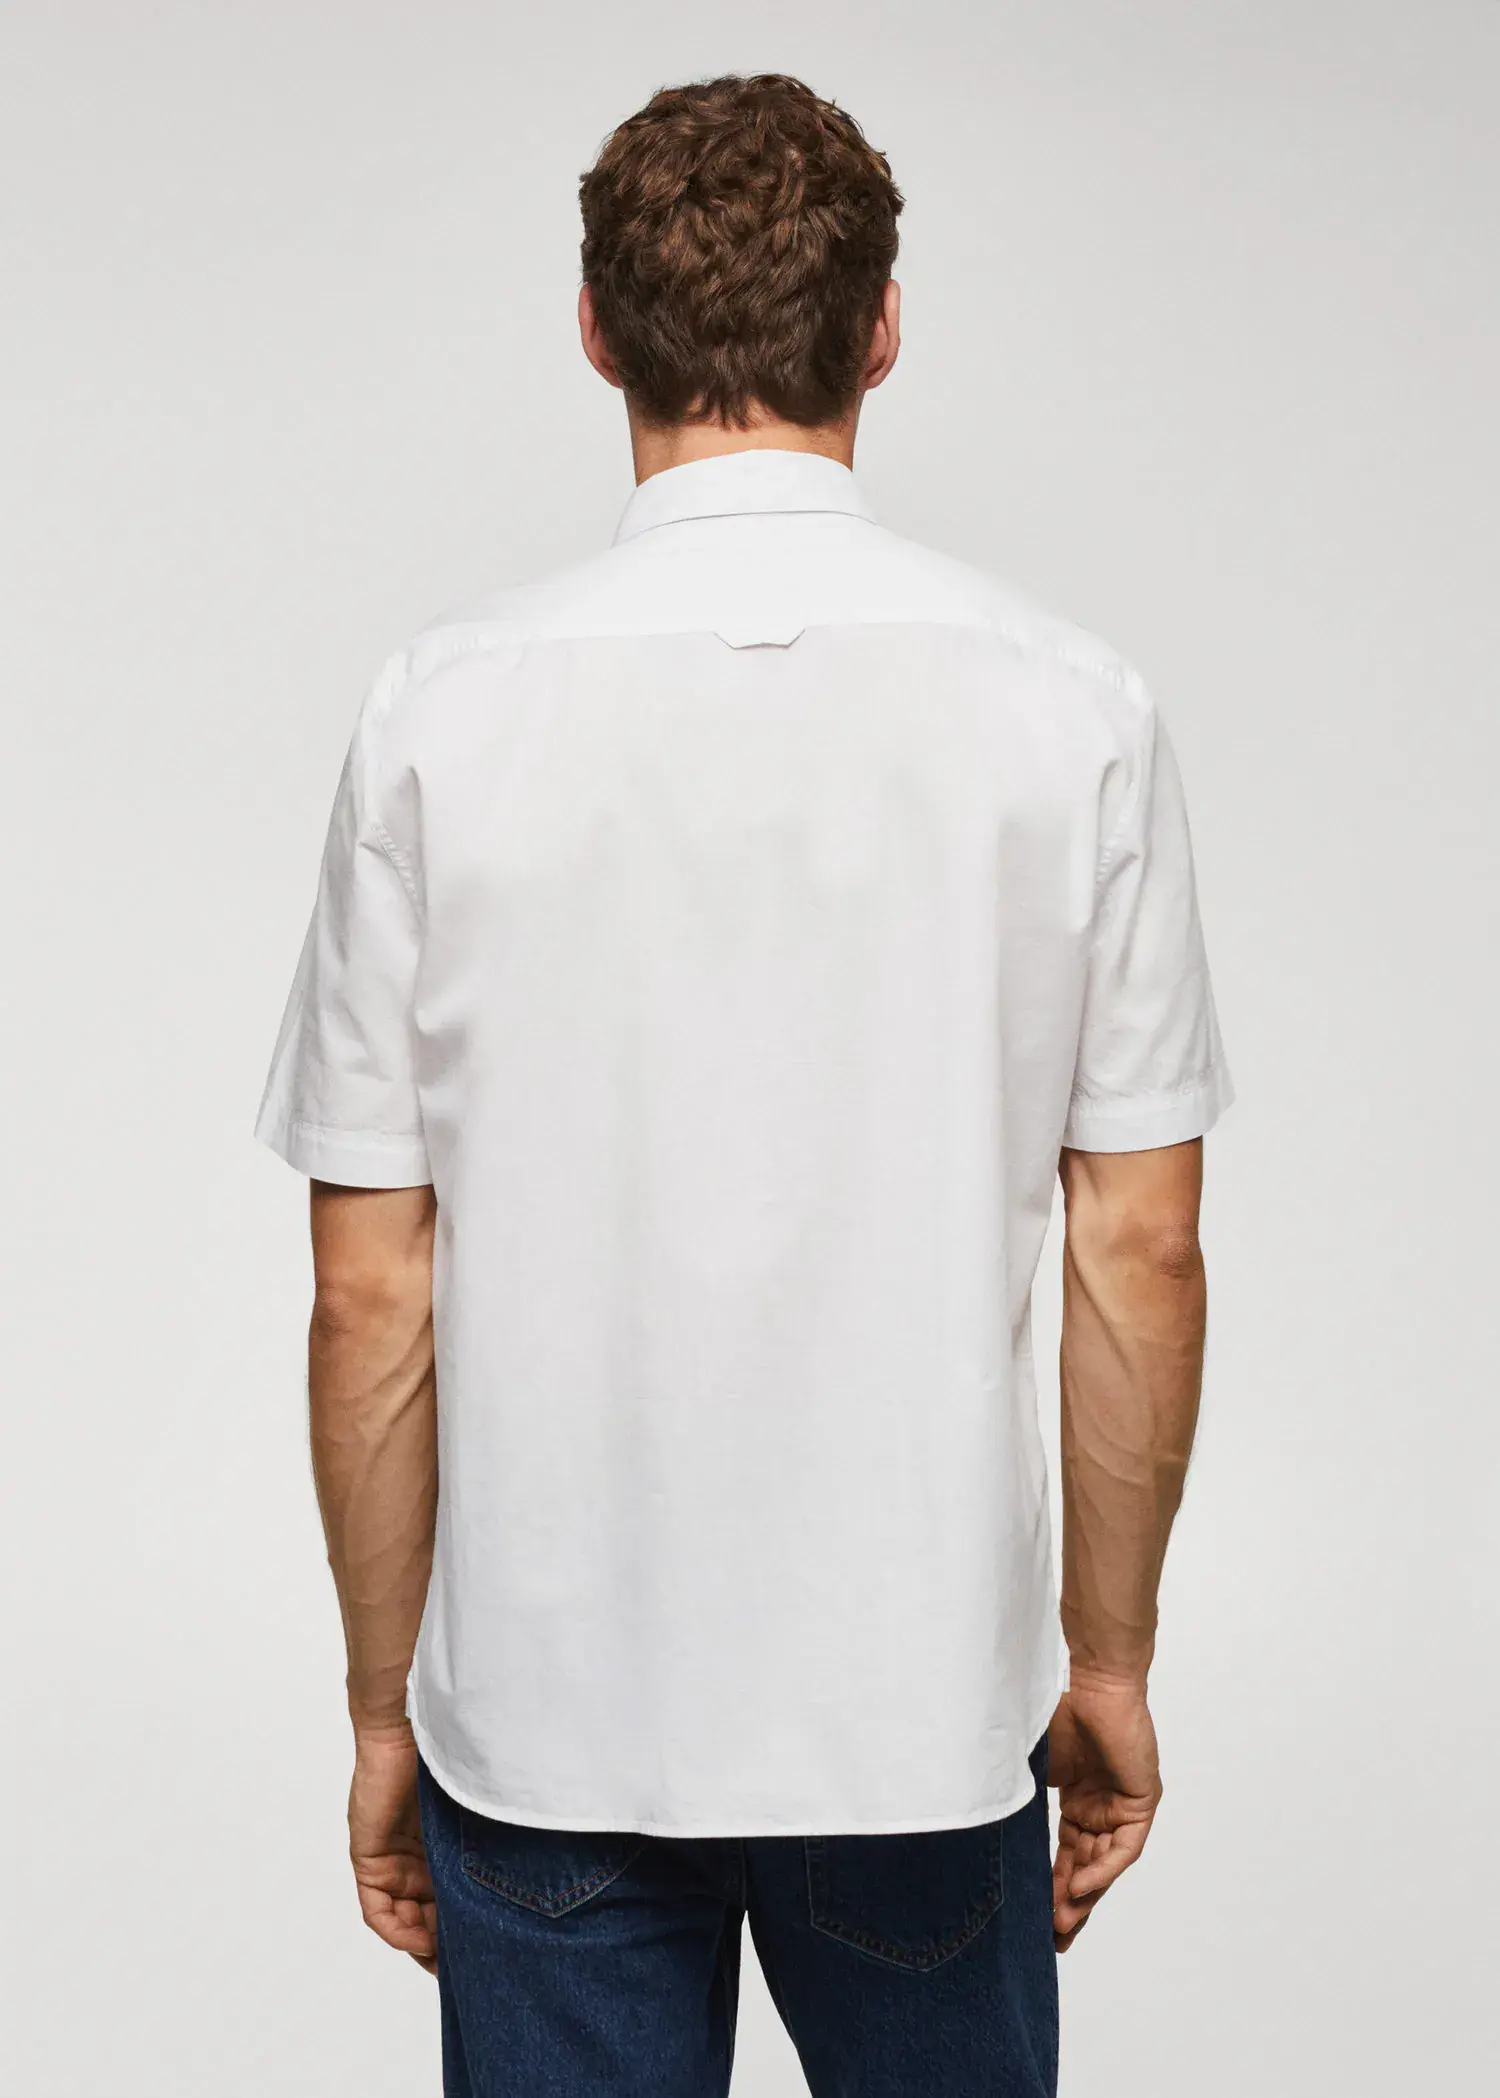 Mango 100% cotton short-sleeved shirt. 3